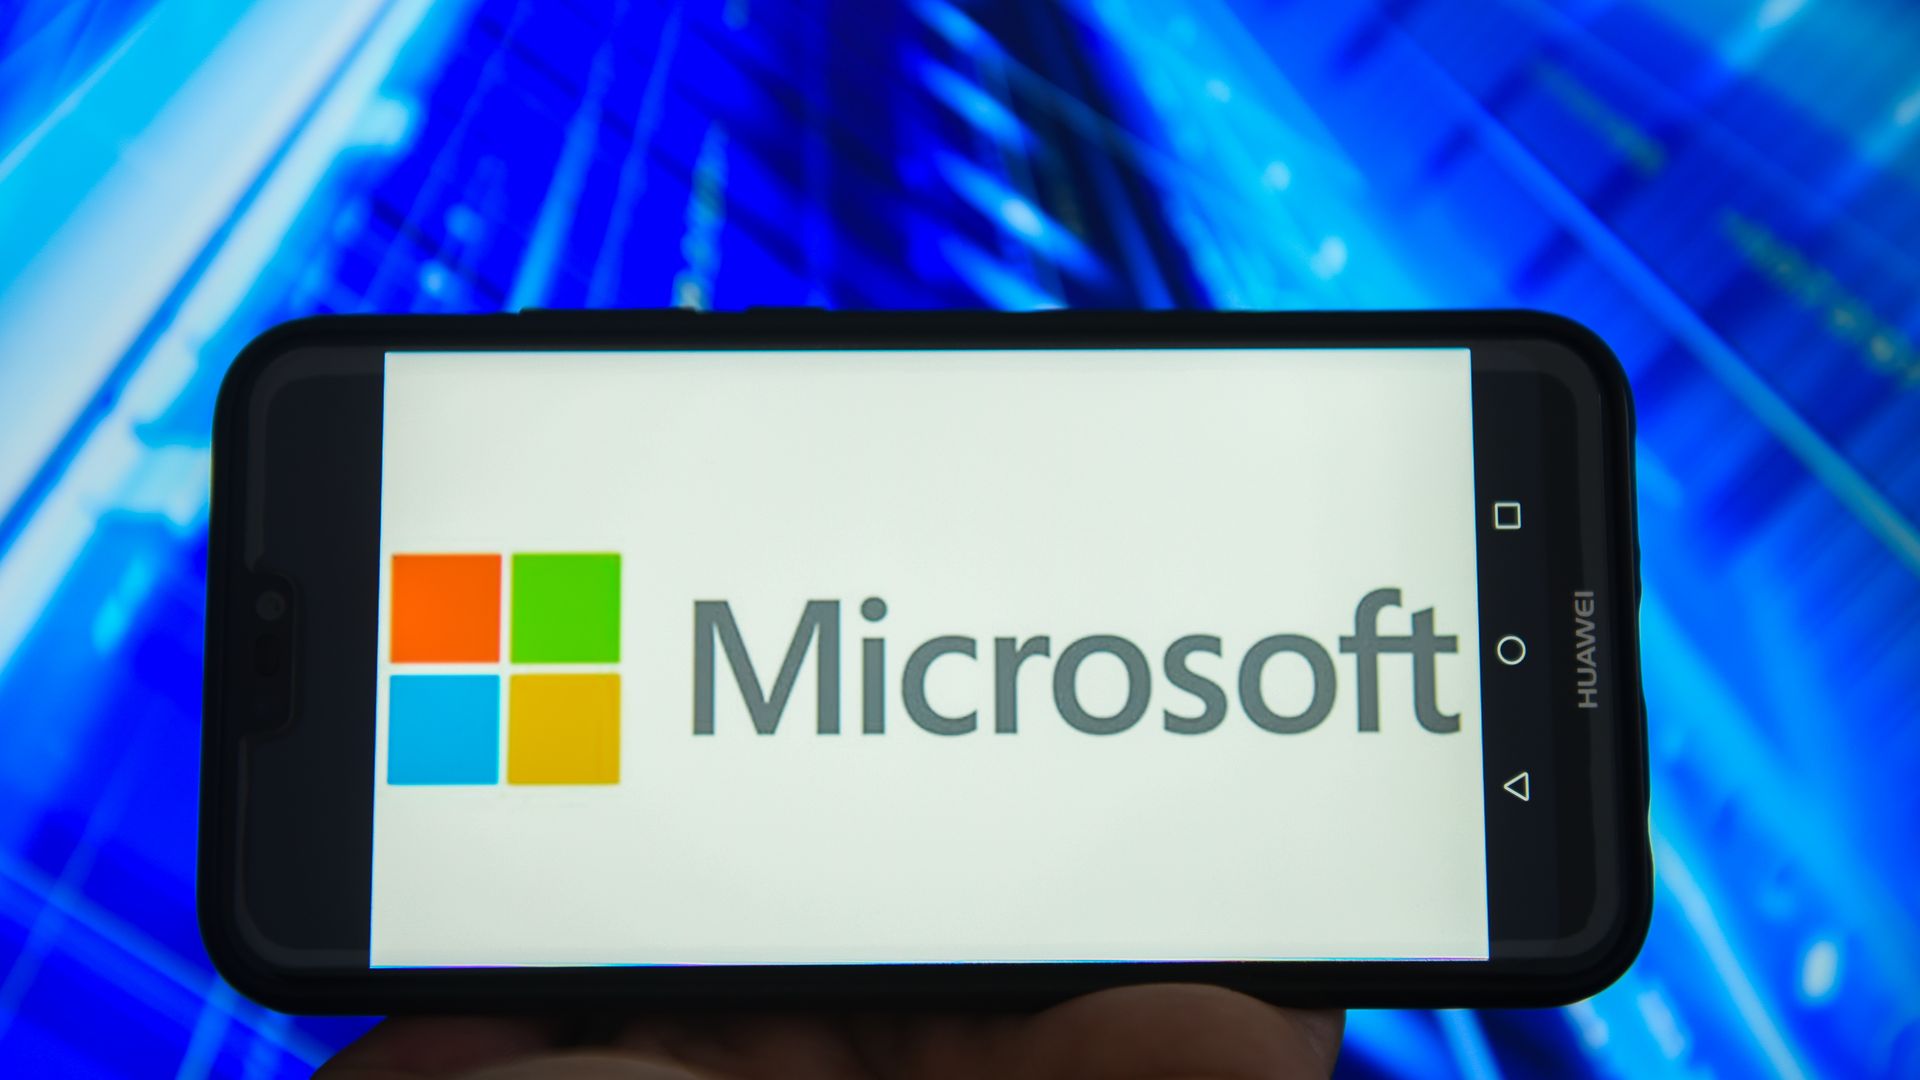 Microsoft logo on phone screen.